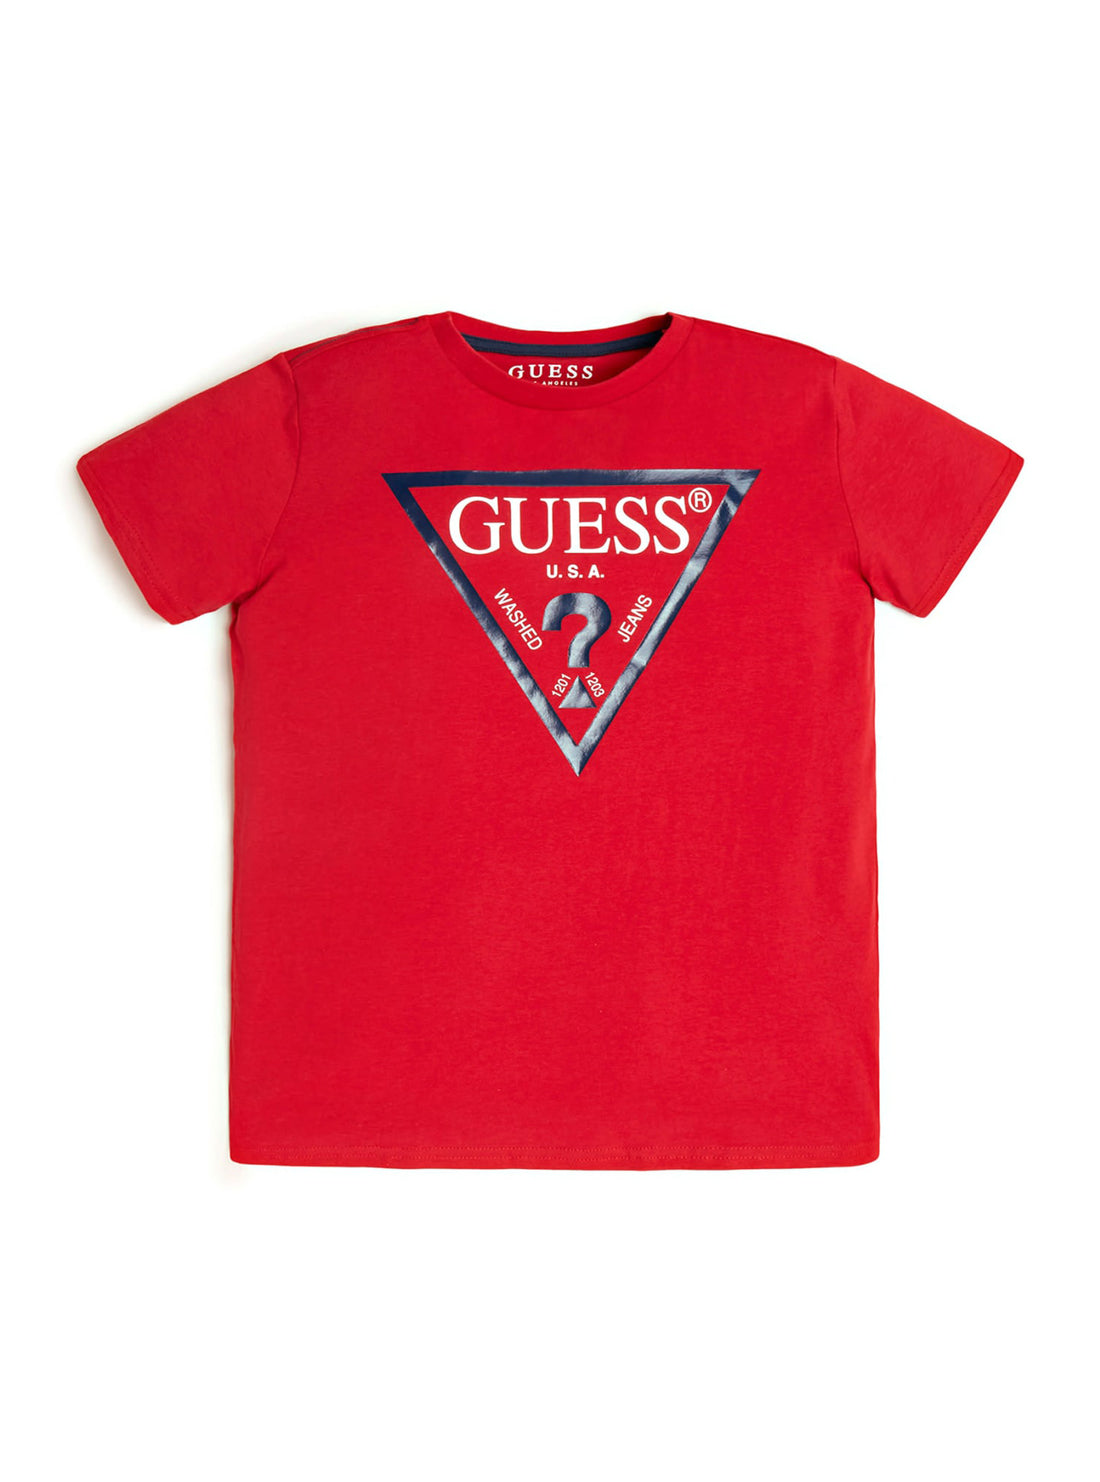 GUESS Big Boys Red Logo T-Shirt (7-16) L73I55K8HM0 Front View